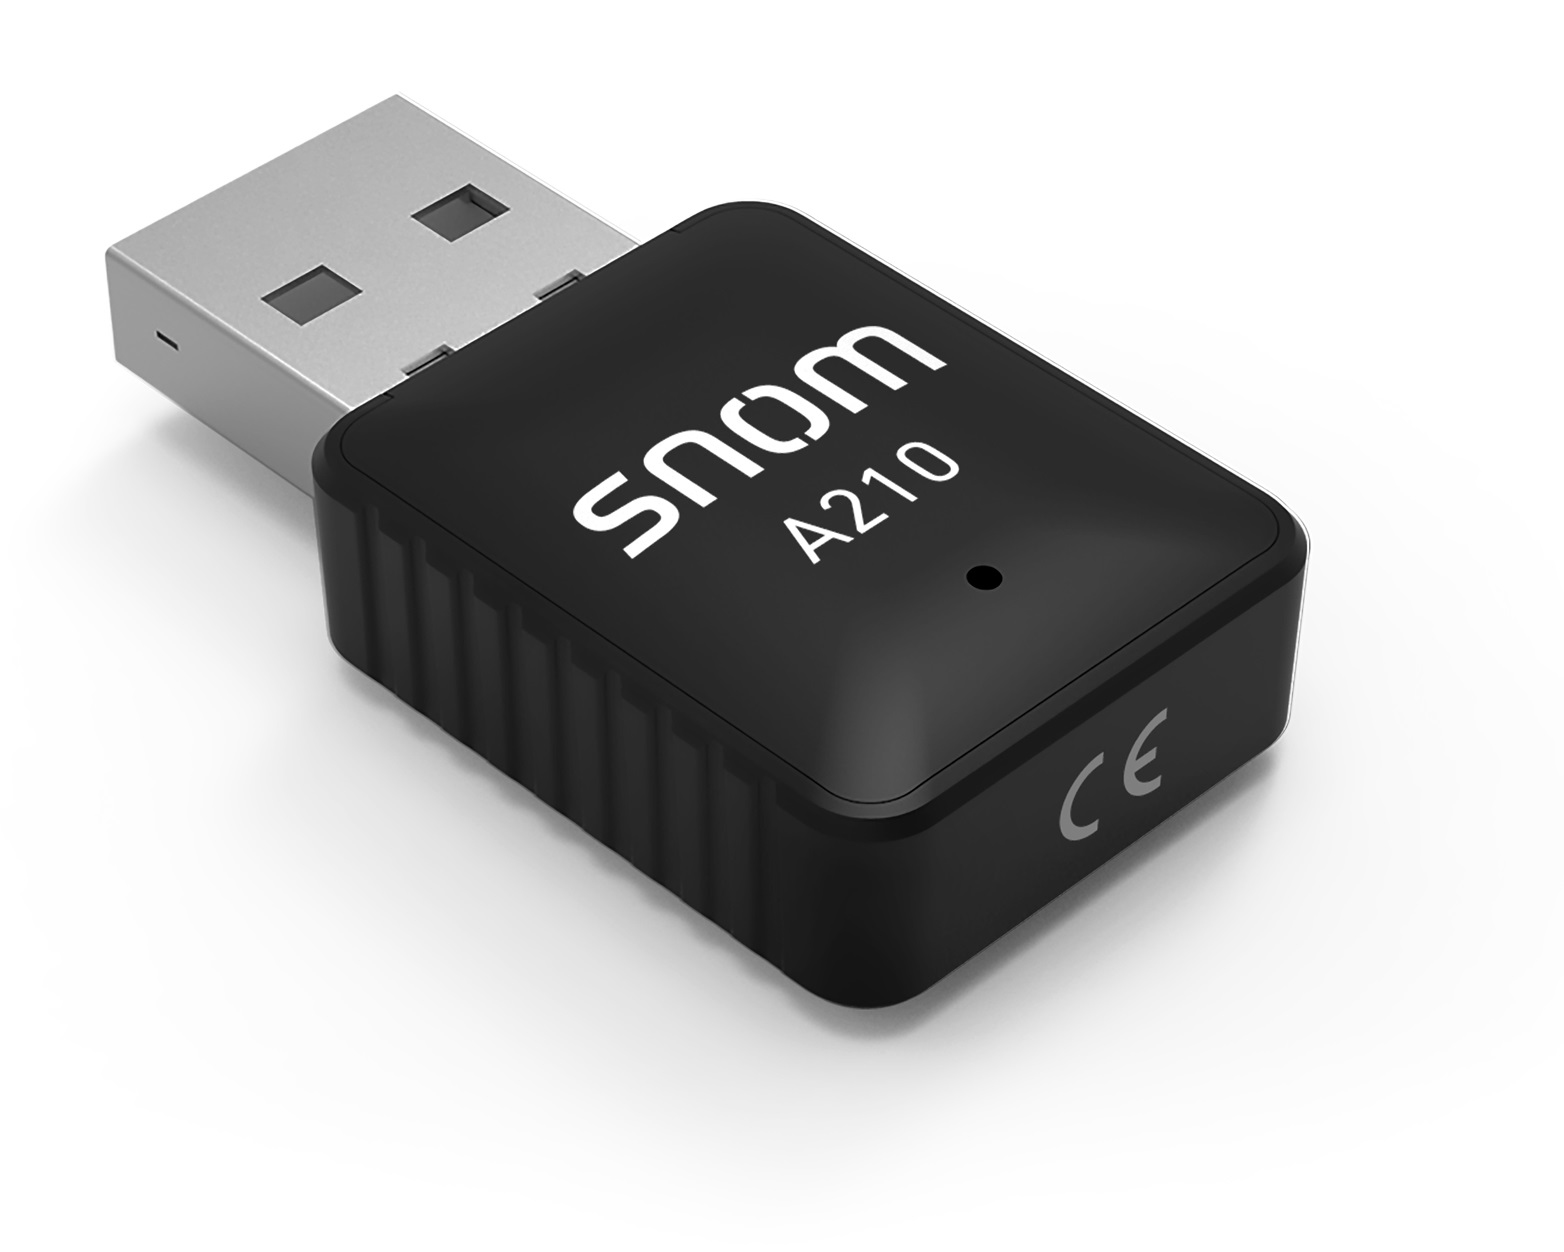 Snom A210 - Netzwerkadapter - USB 2.0